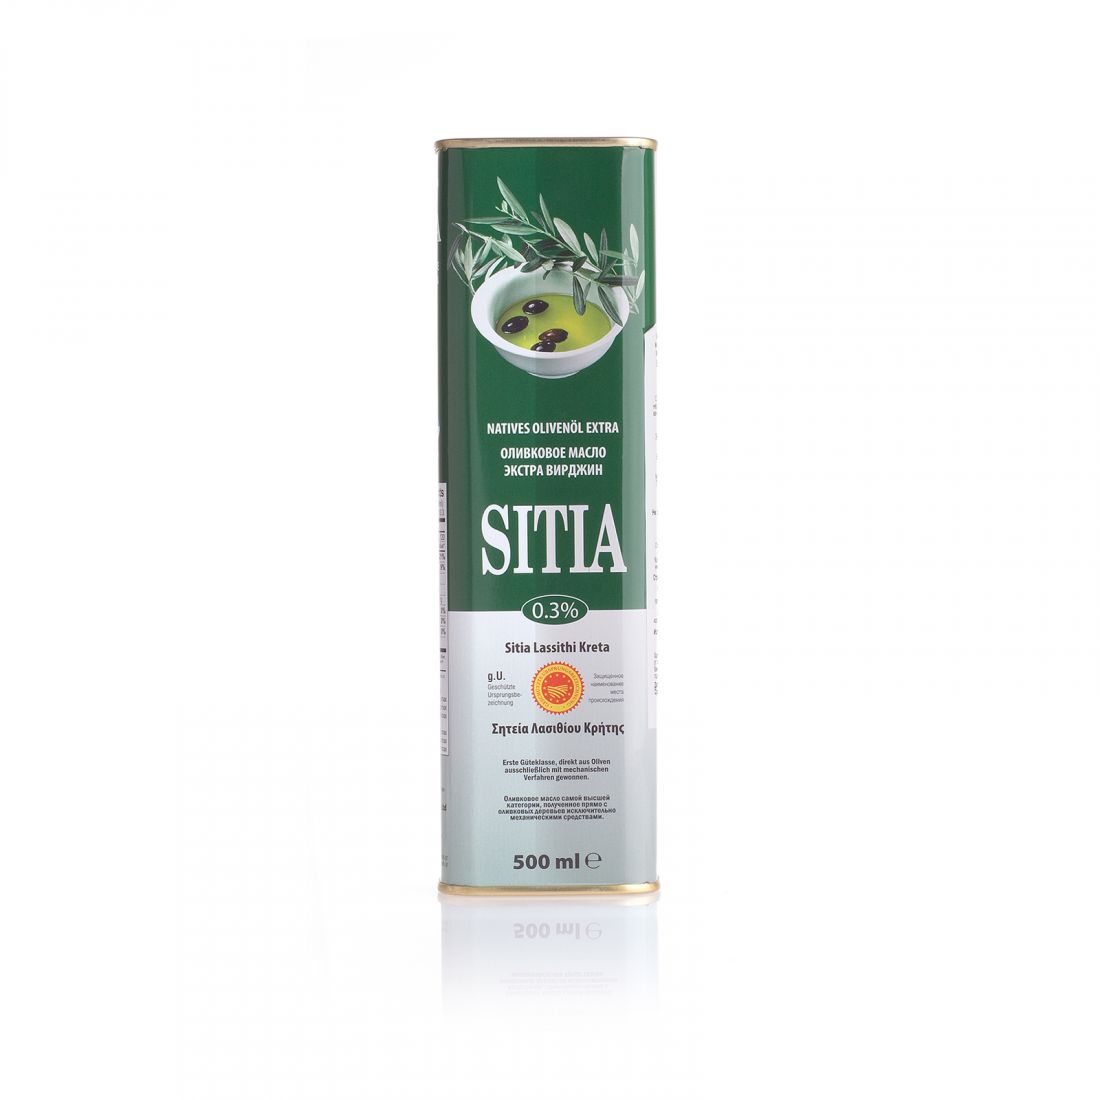 Оливковое масло SITIA - 500 мл 0.3 экстра вирджин PDO